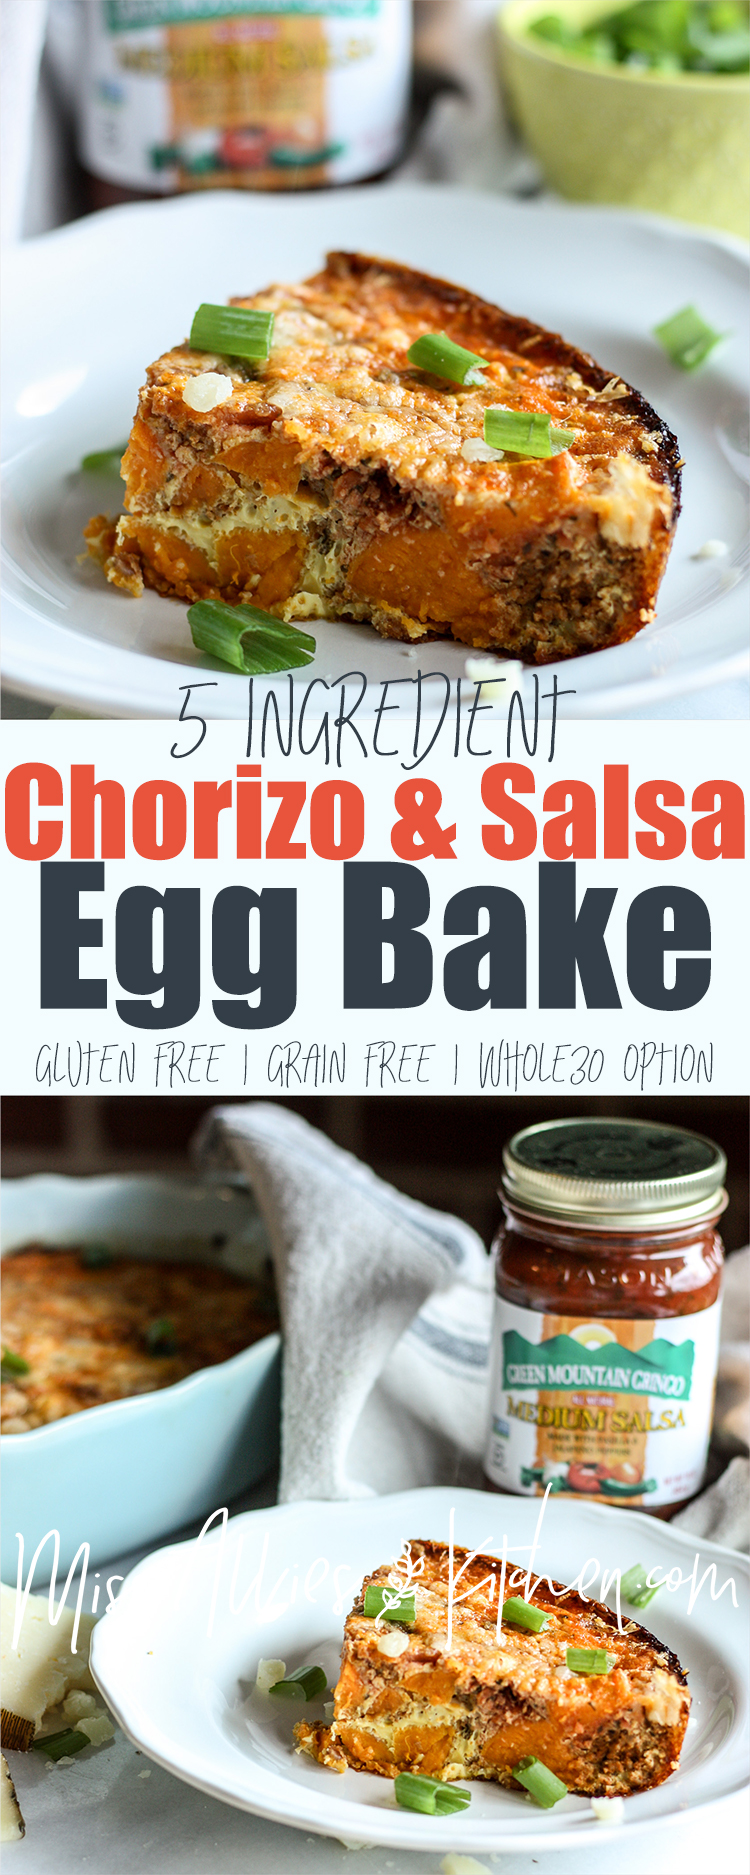 5 Ingredient Chorizo & Salsa Egg Bake - with a Whole30 option! 